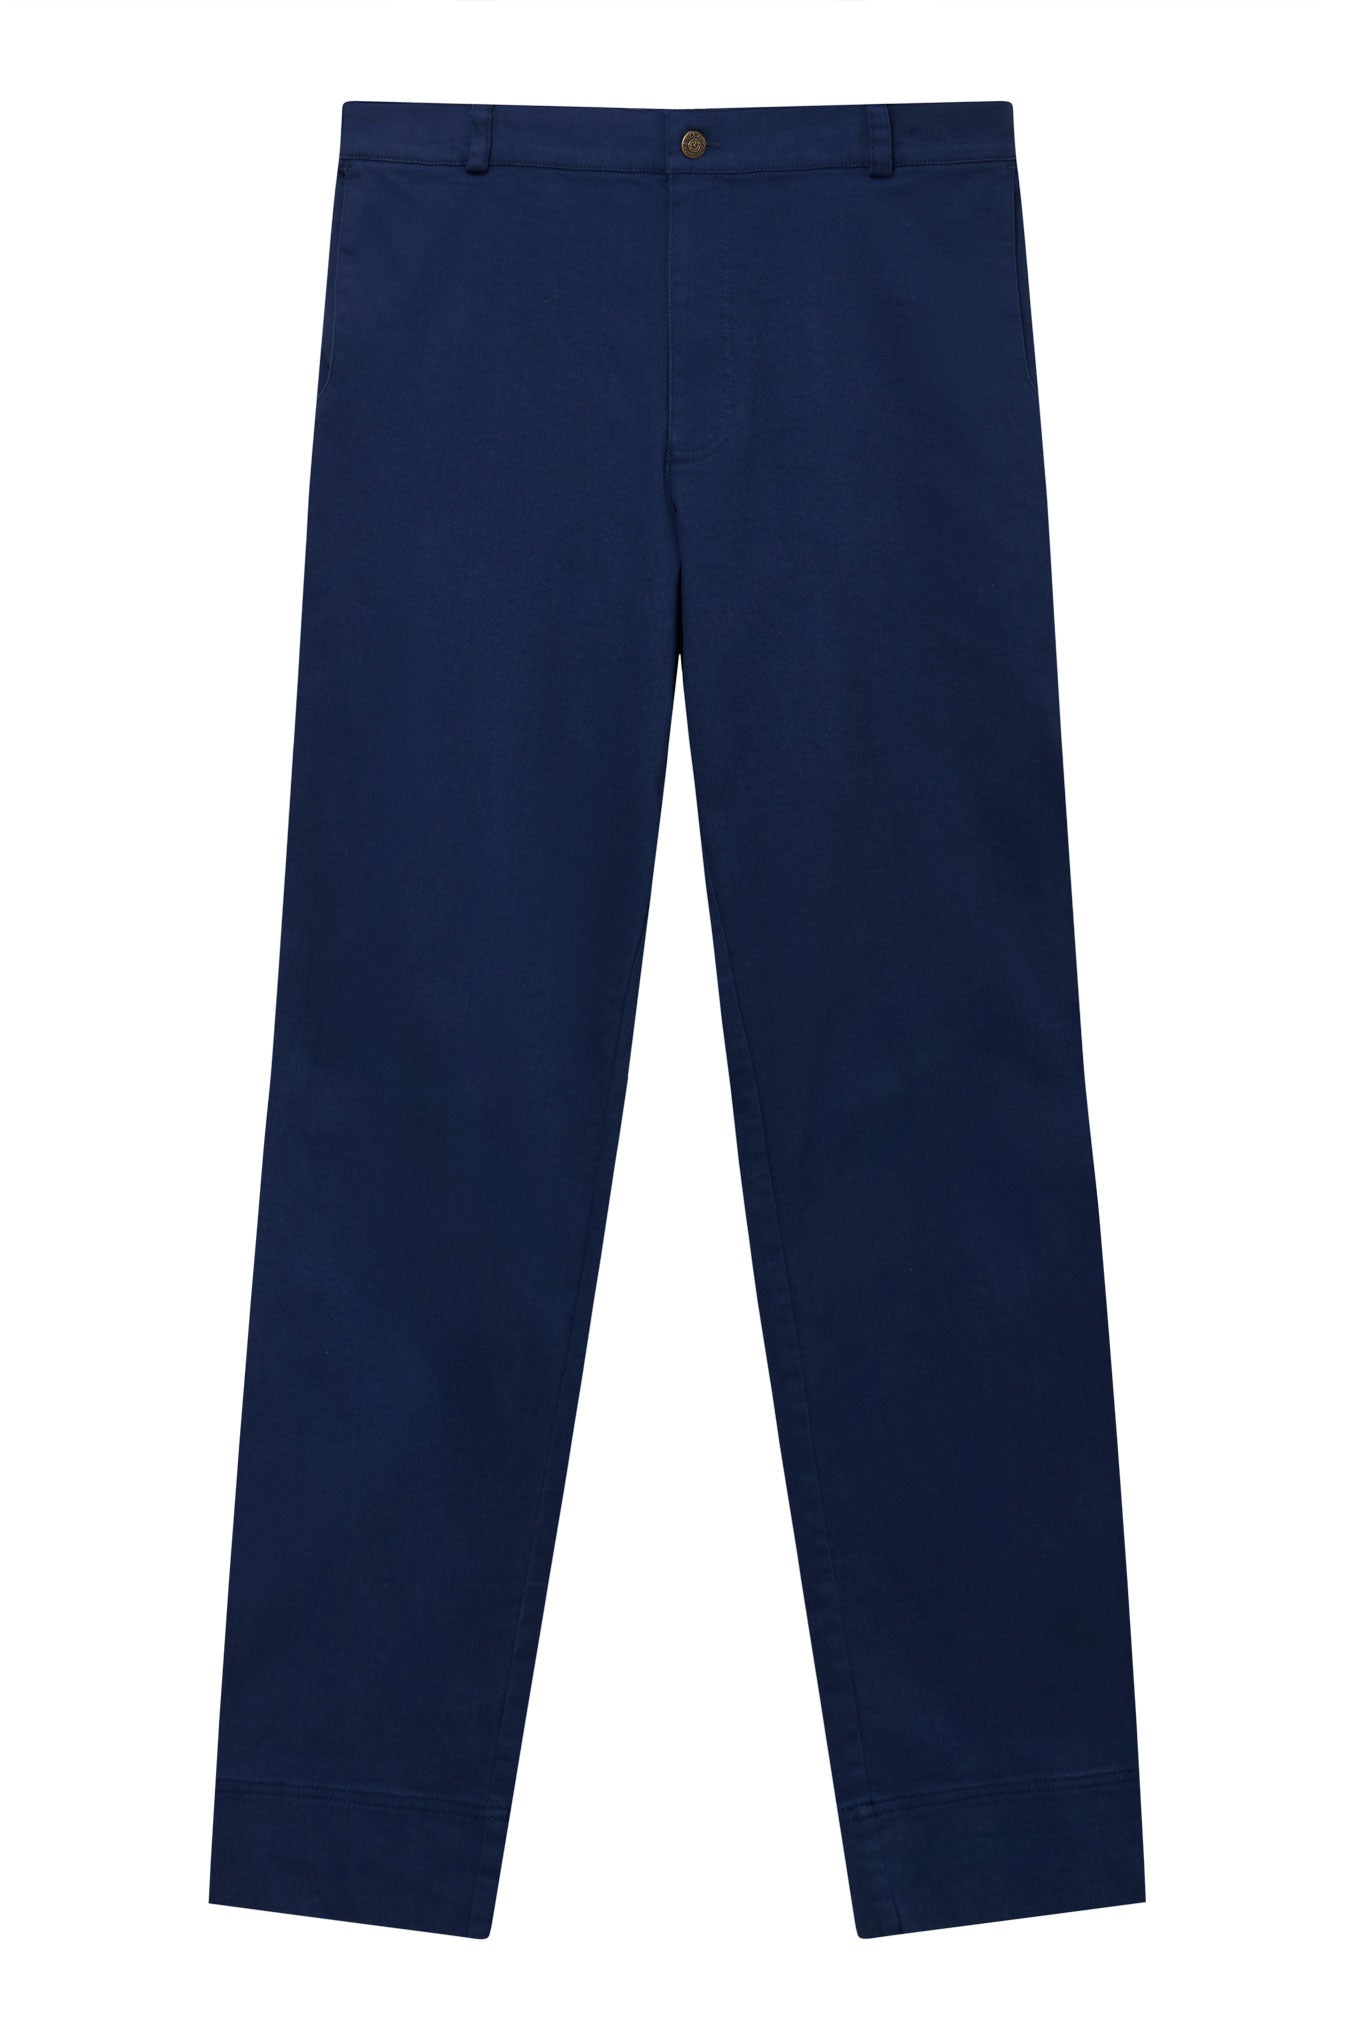 Komodo Men's Blue Sol - Organic Cotton Trouser Navy